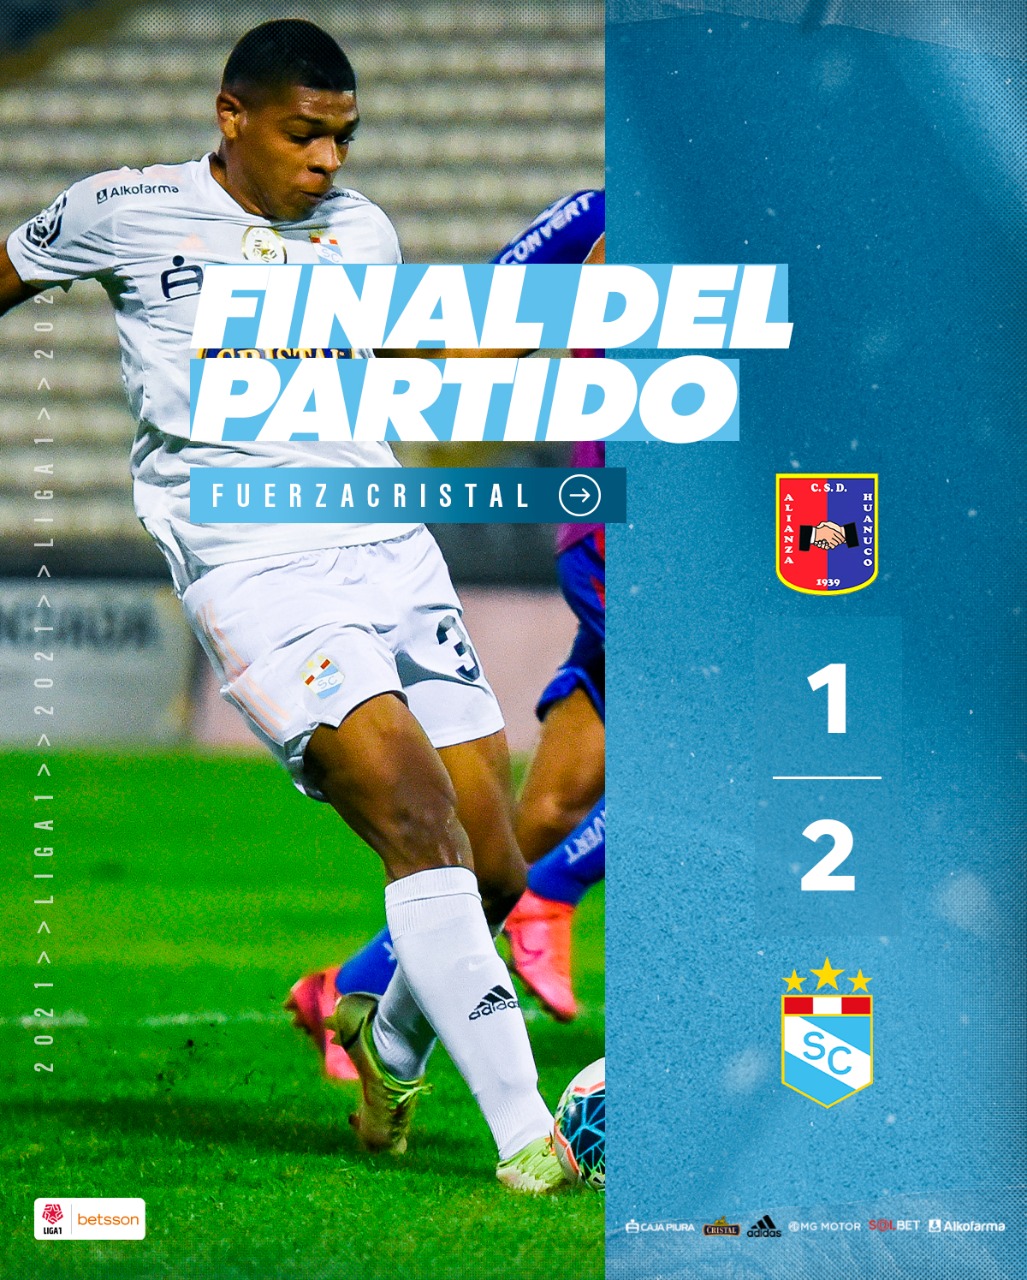 Club Nacional Py on X: Olimpia 2-0 Nacional #CLAUSURA